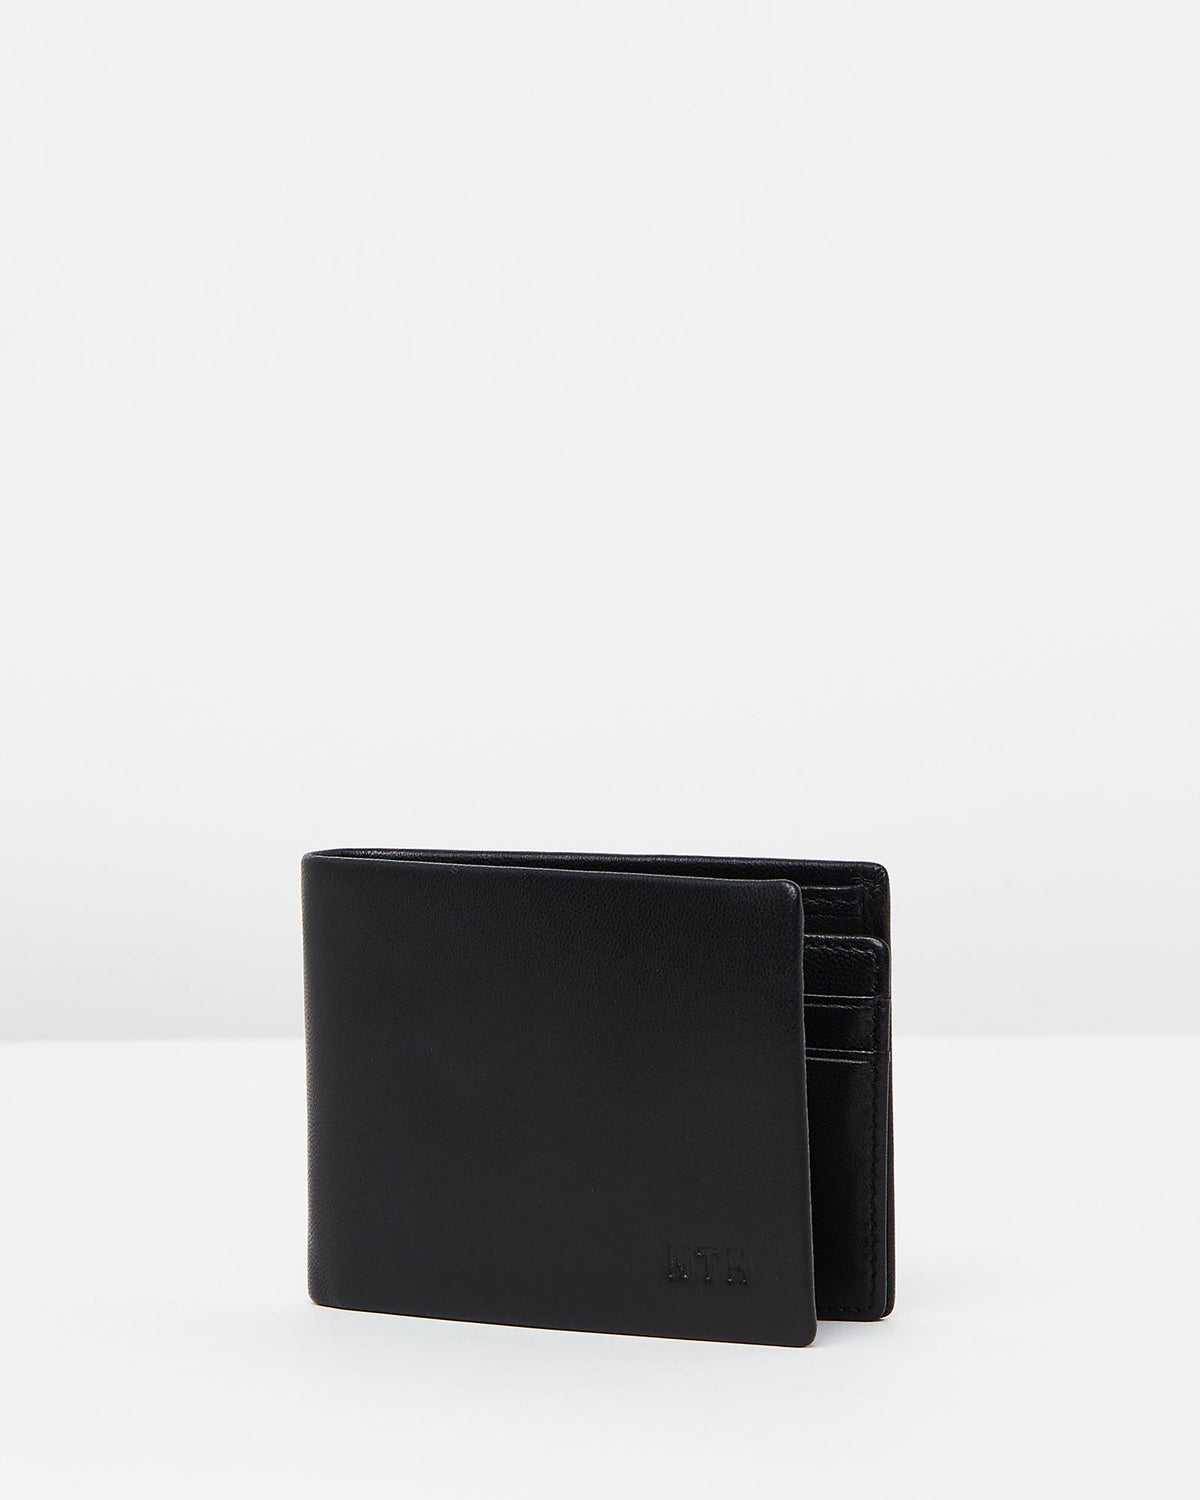 The Gentleman Wallet Leather Black